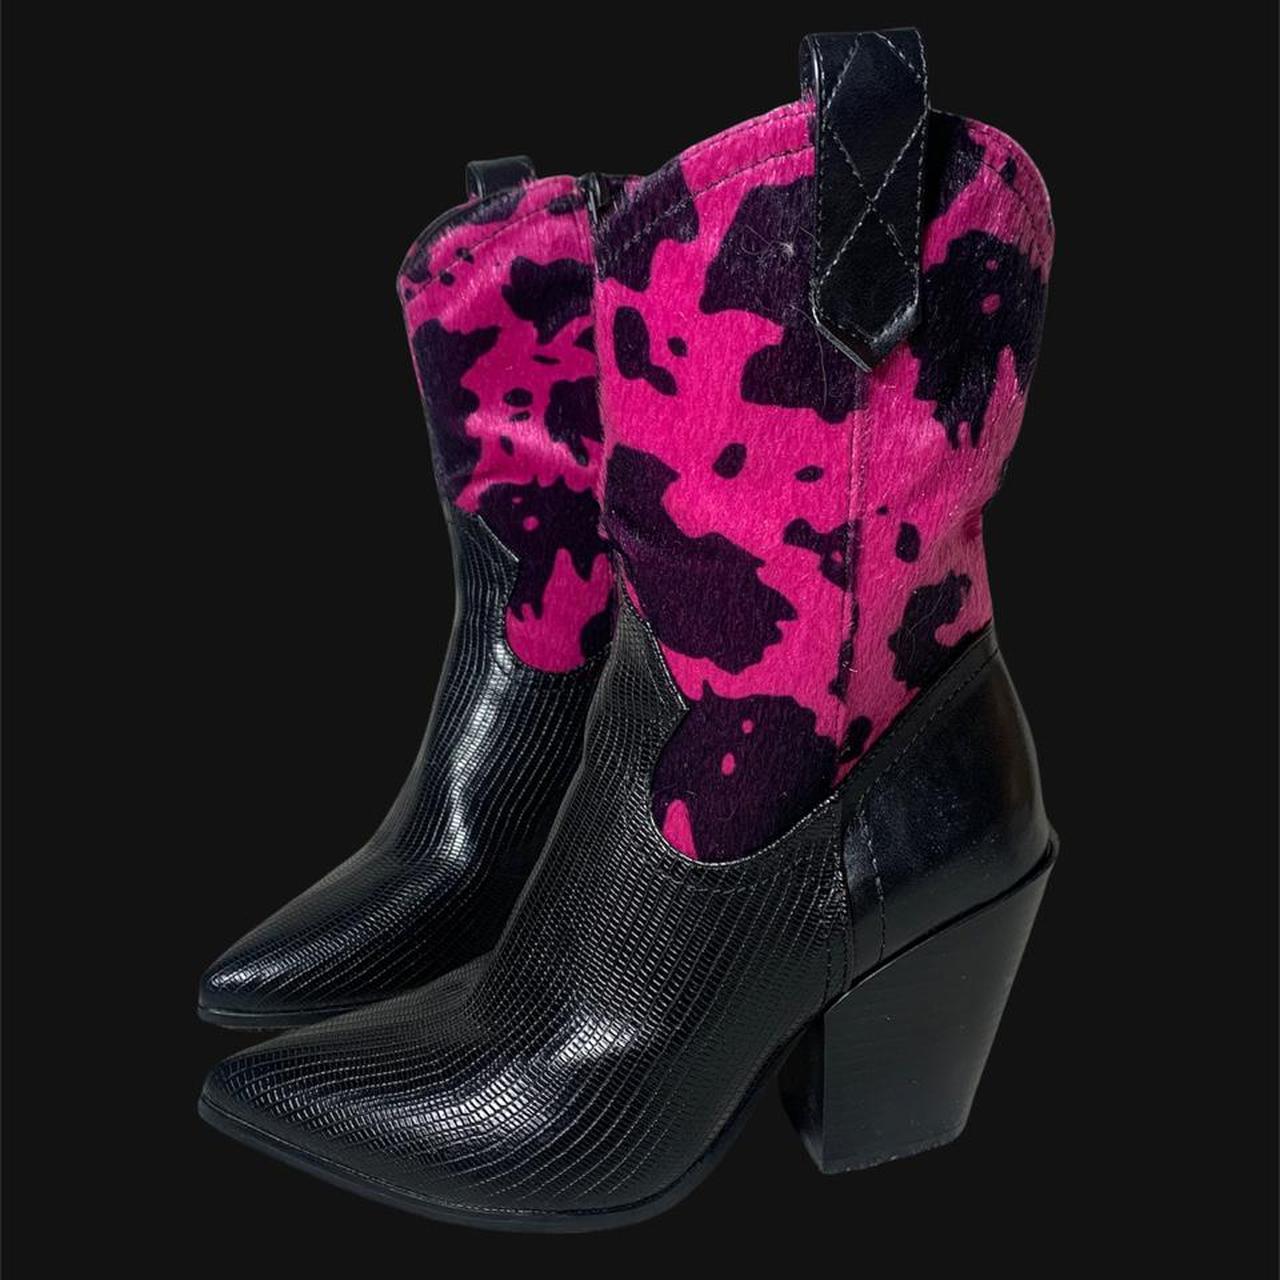 Slazenger Women's Black and Pink Boots (2)